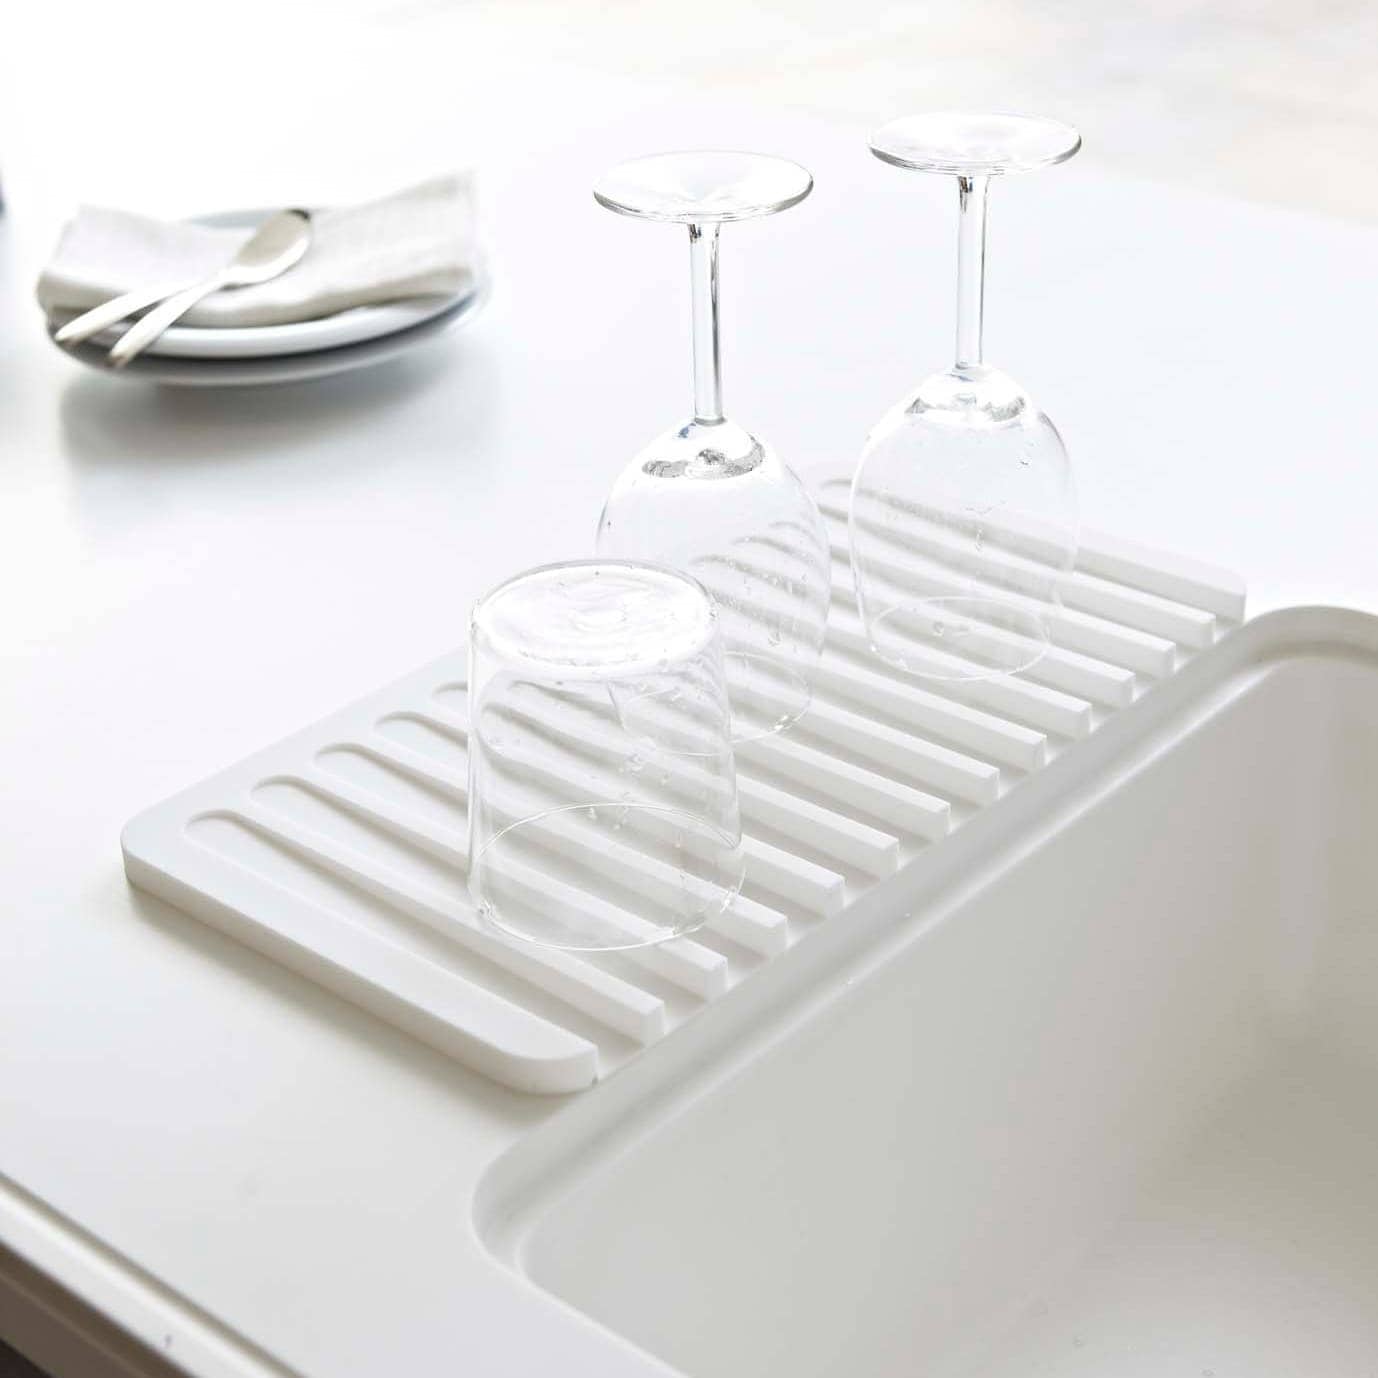  Yamazaki Home Soap Tray - Silic One Holder Dish for Sink Silic  One One Size Black : Home & Kitchen